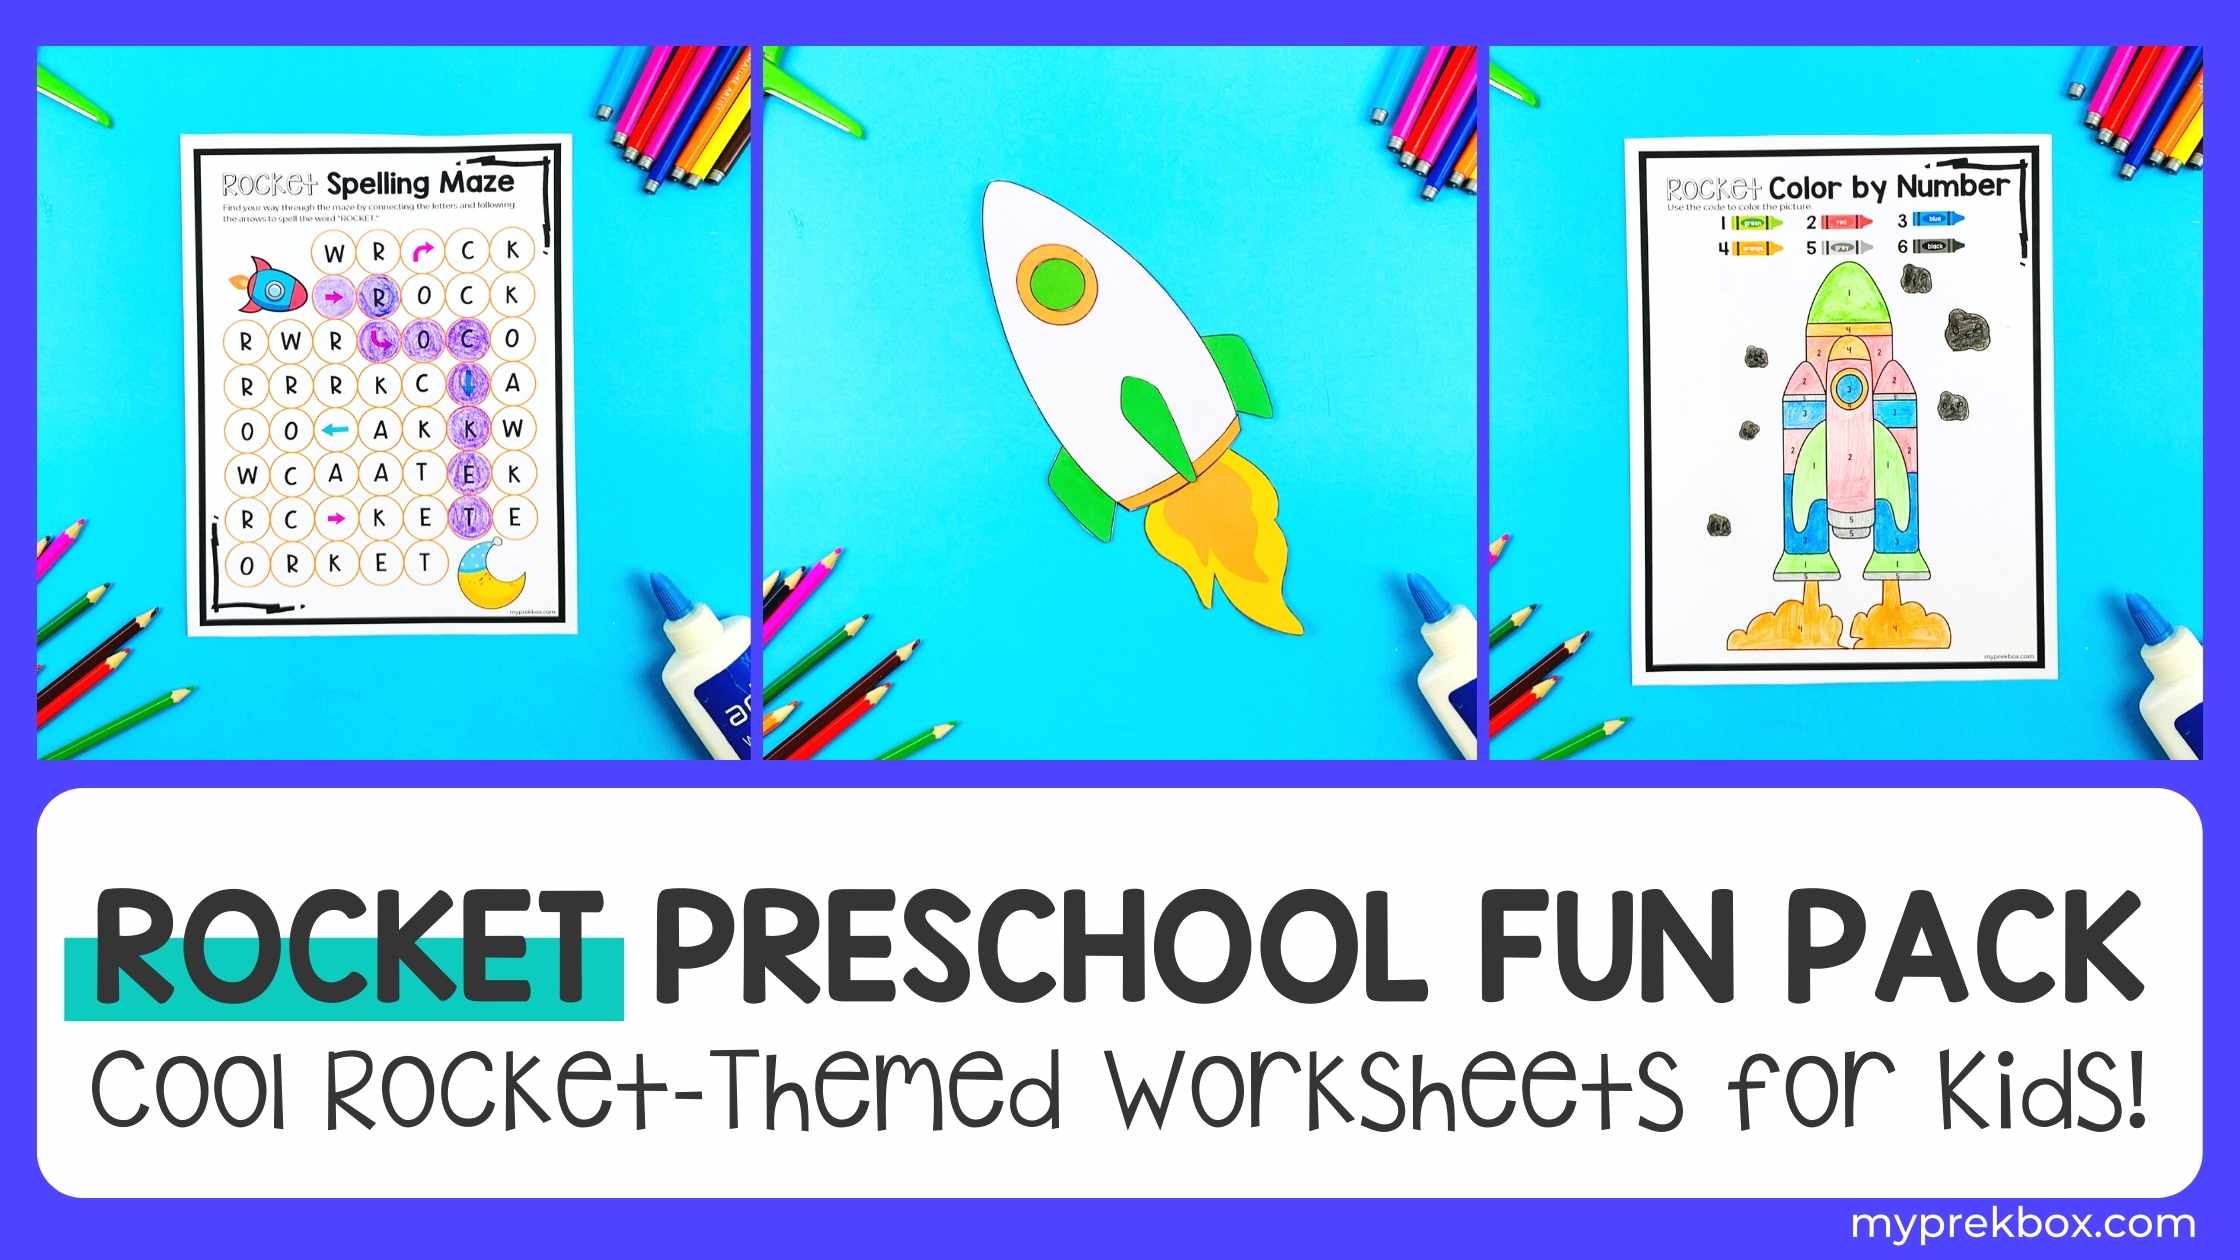 Have a Blast with Rocket Preschool Fun Pack